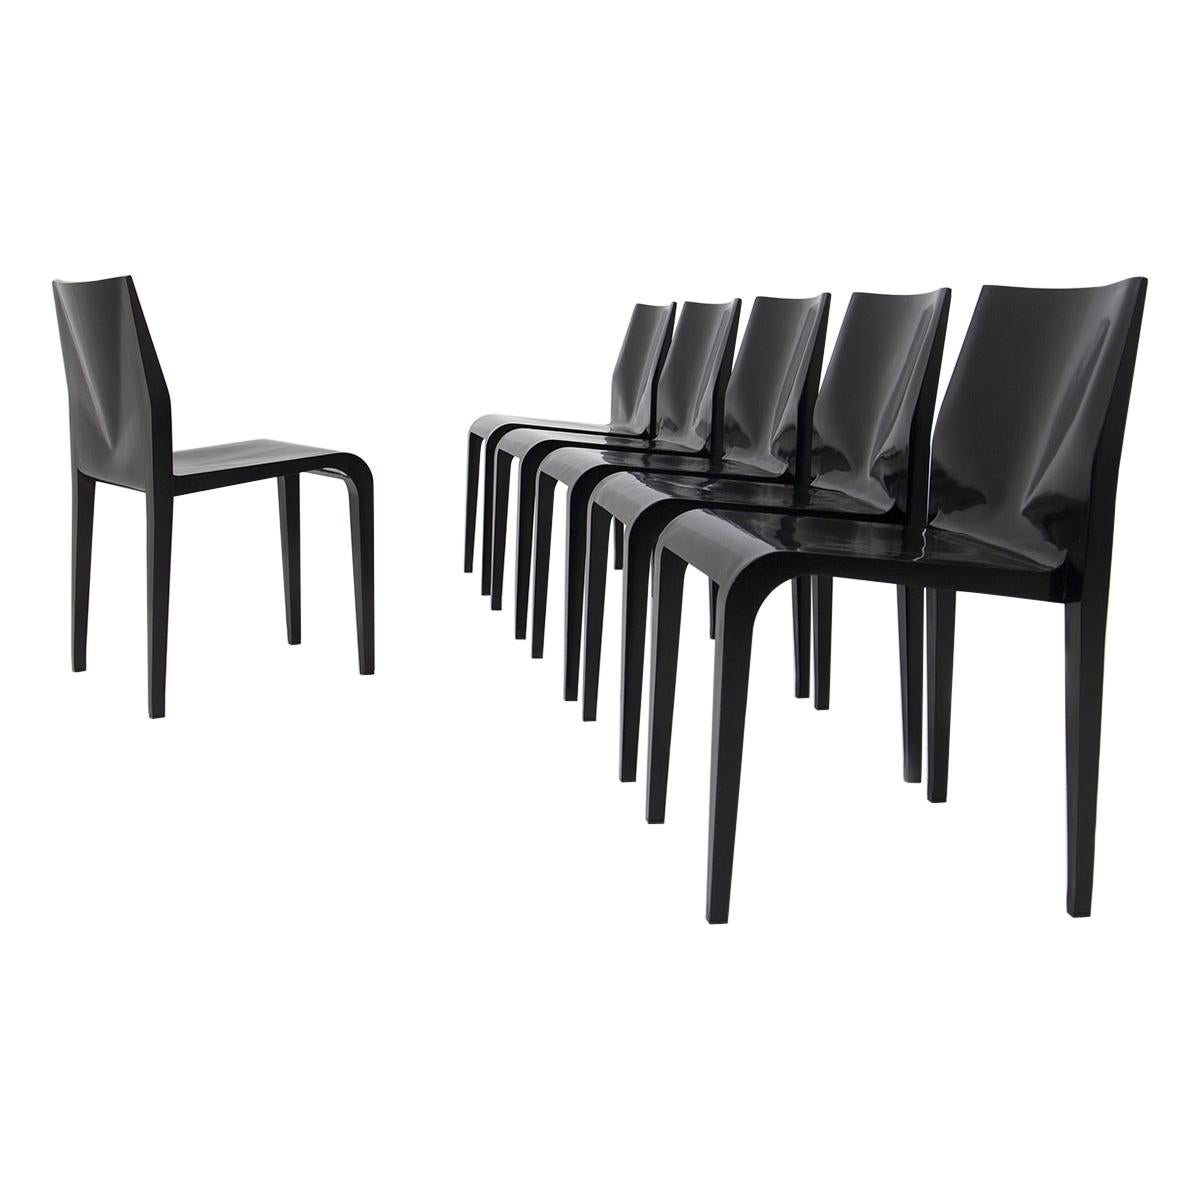 Chairs Laleggera by Riccardo Blumer in Black Lacquered, 1997